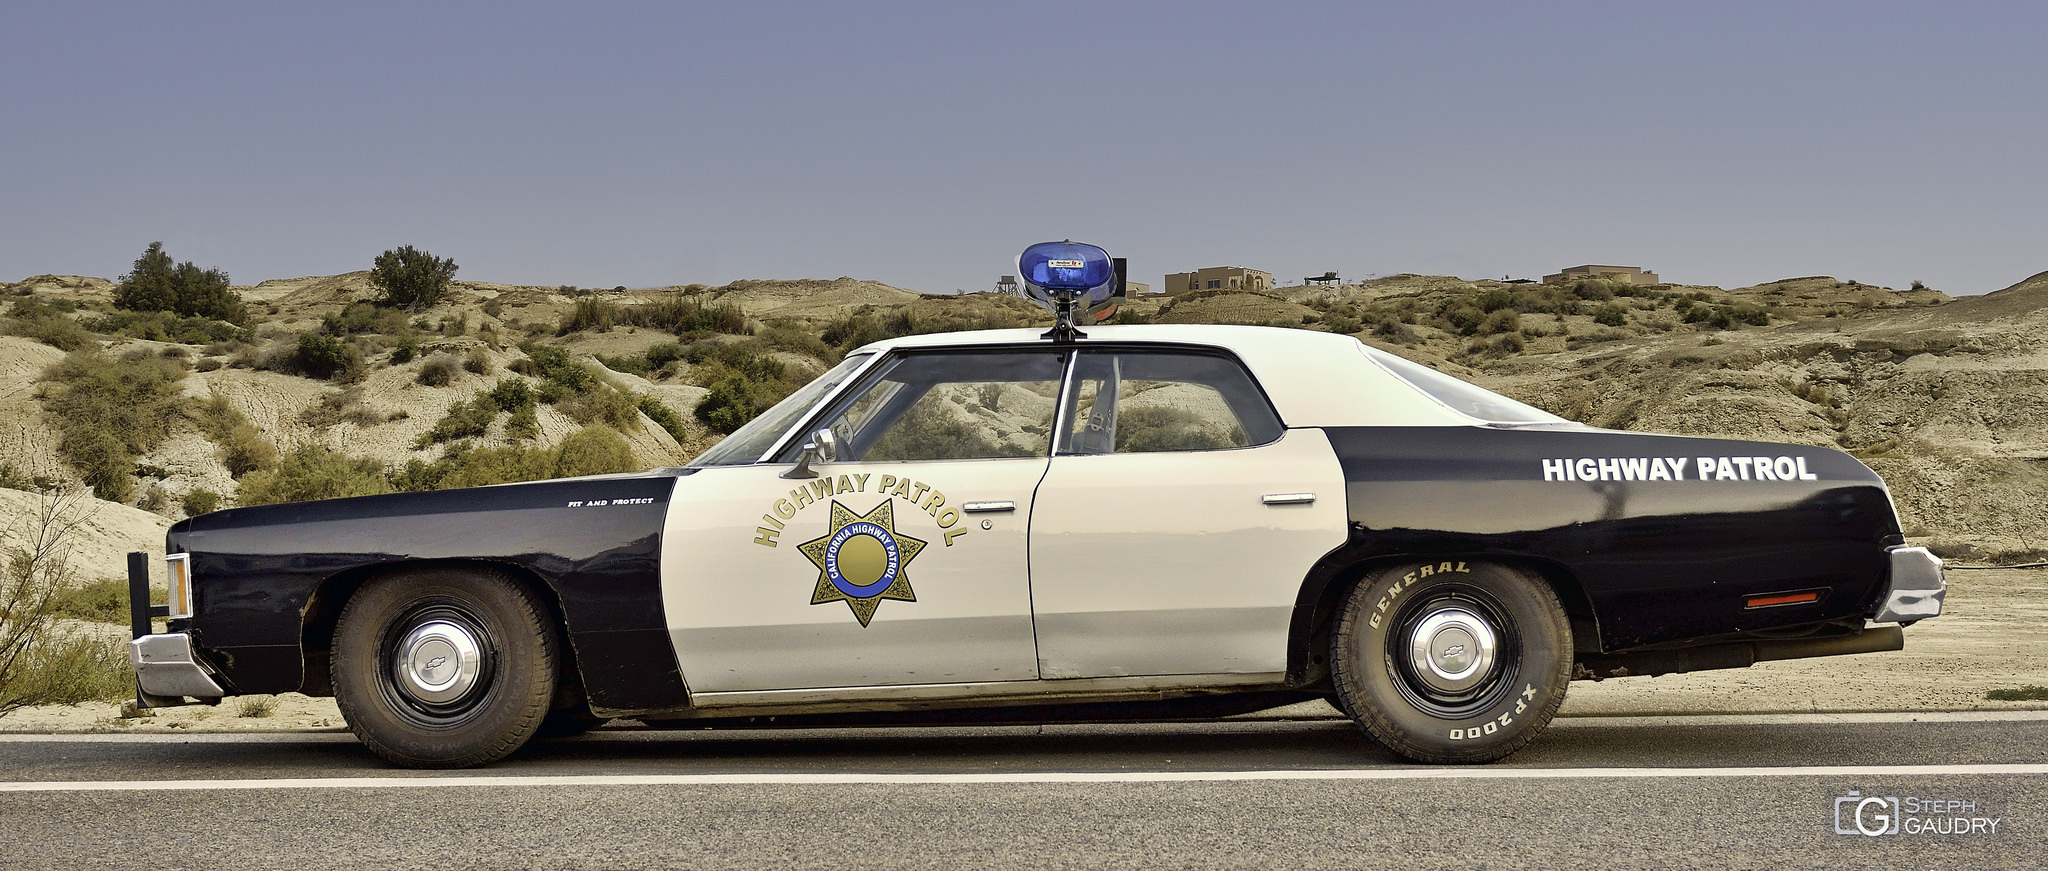 California highway patrol - pit and protect [Cliquez pour lancer le diaporama]